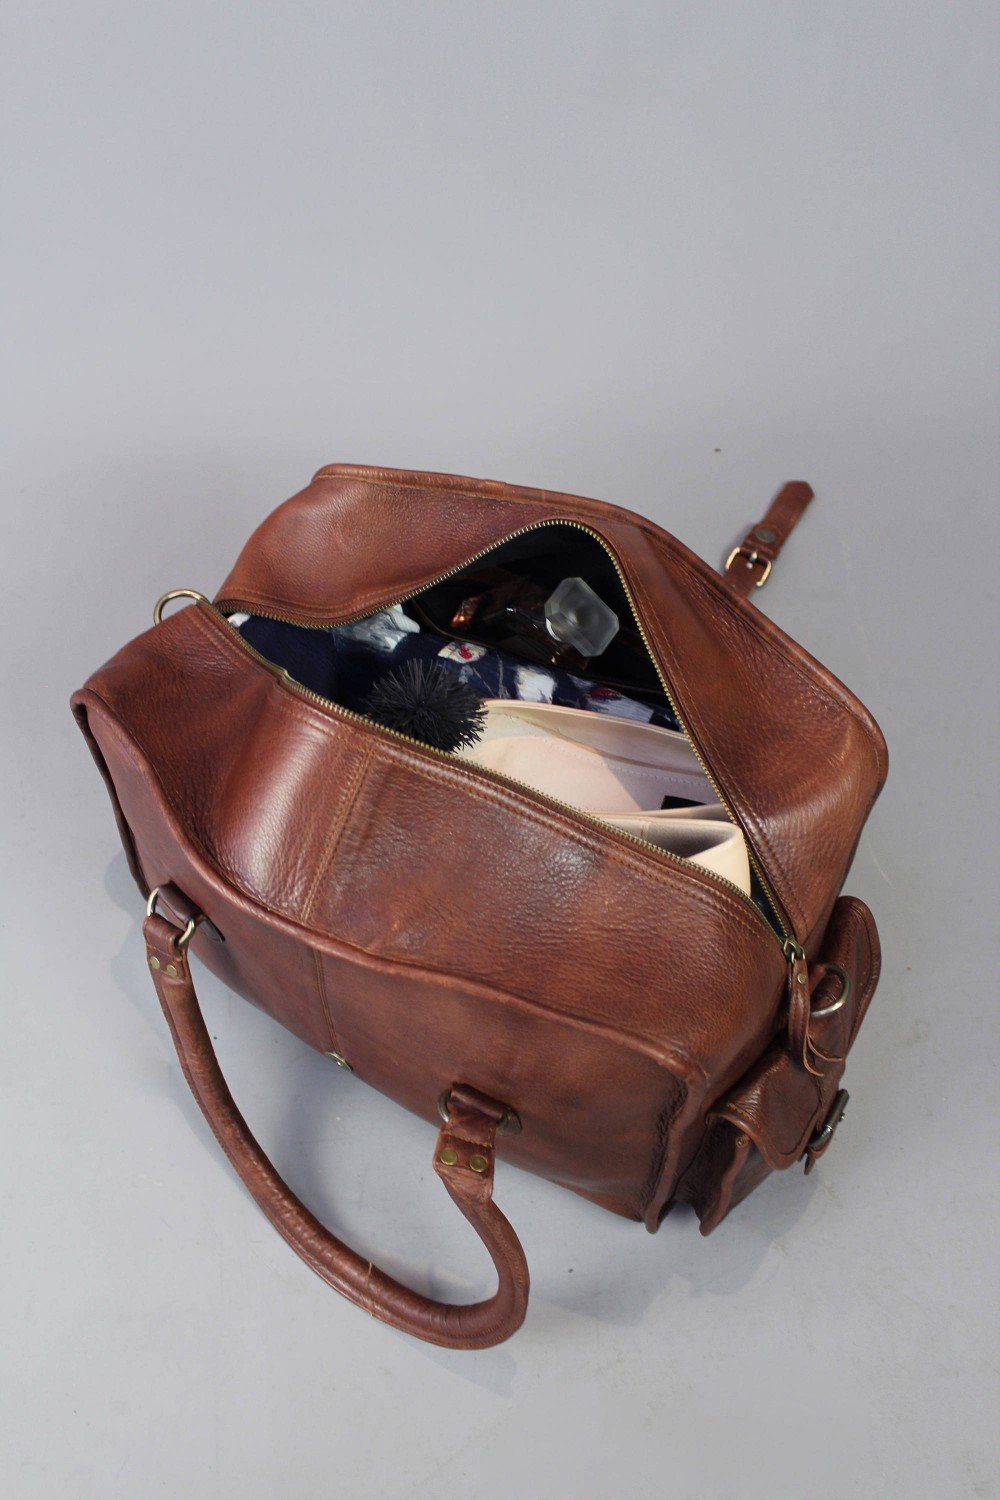 Council Travel Bag - Vintage Brown Leather - Bricks Masons